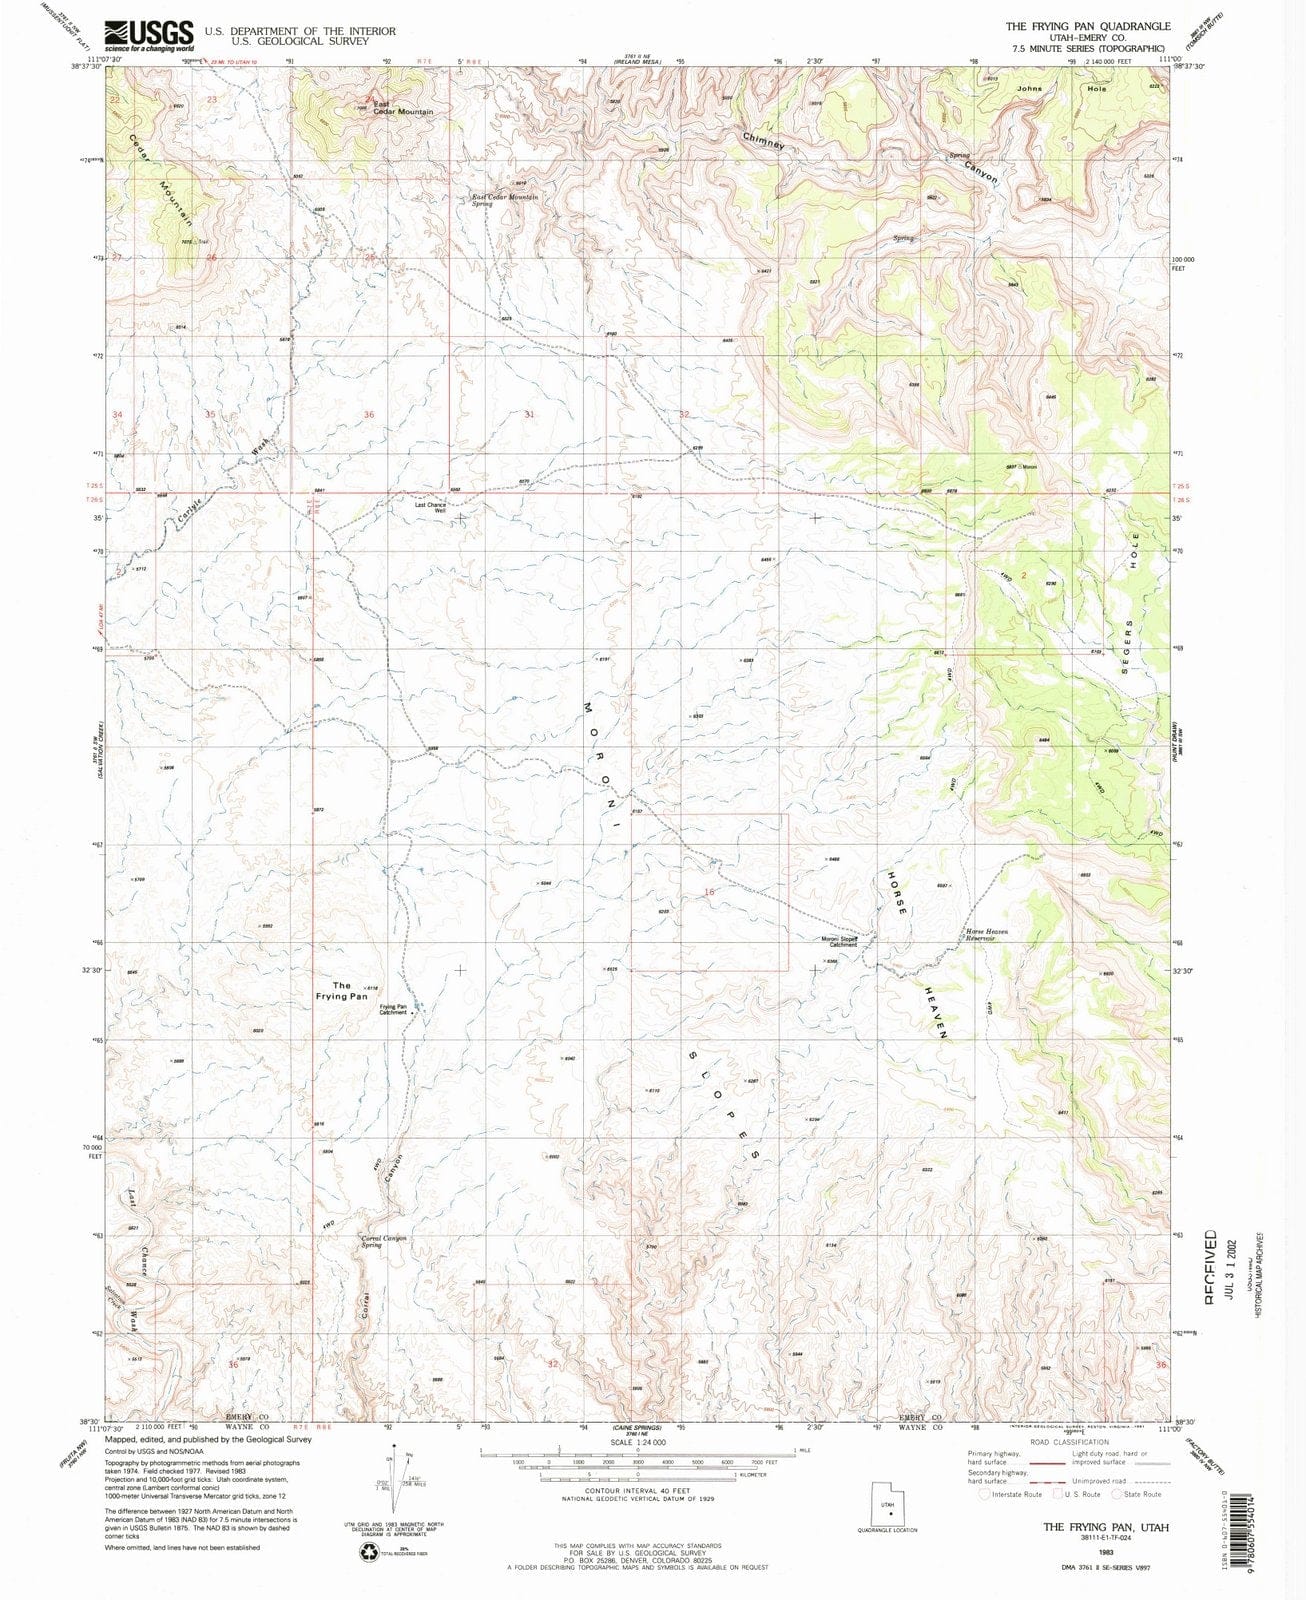 1983 The Frying Pan, UT - Utah - USGS Topographic Map